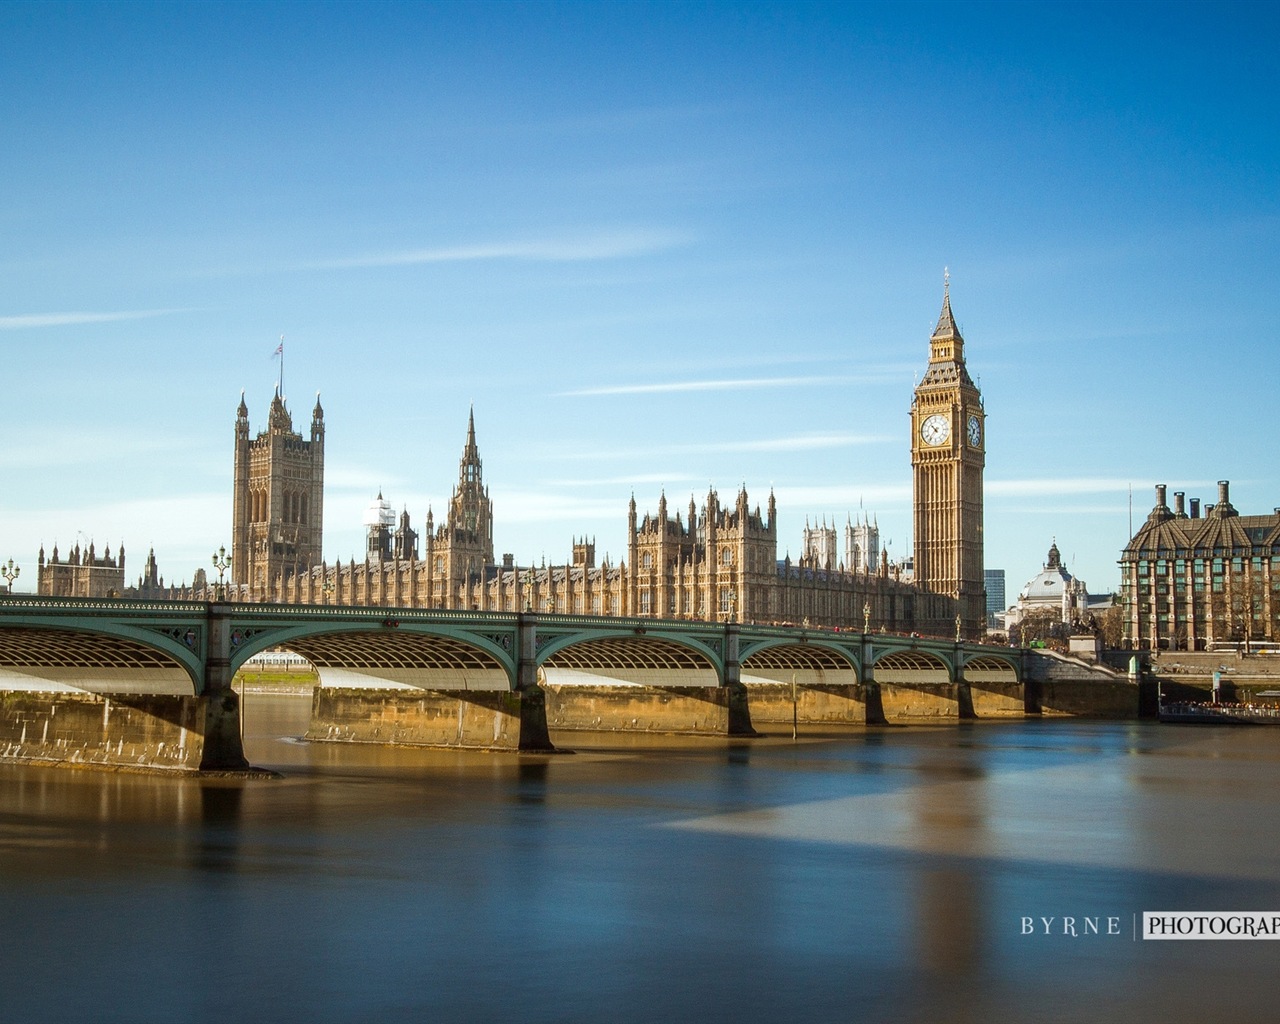 Beautiful Britain, Windows 8 theme wallpapers #4 - 1280x1024